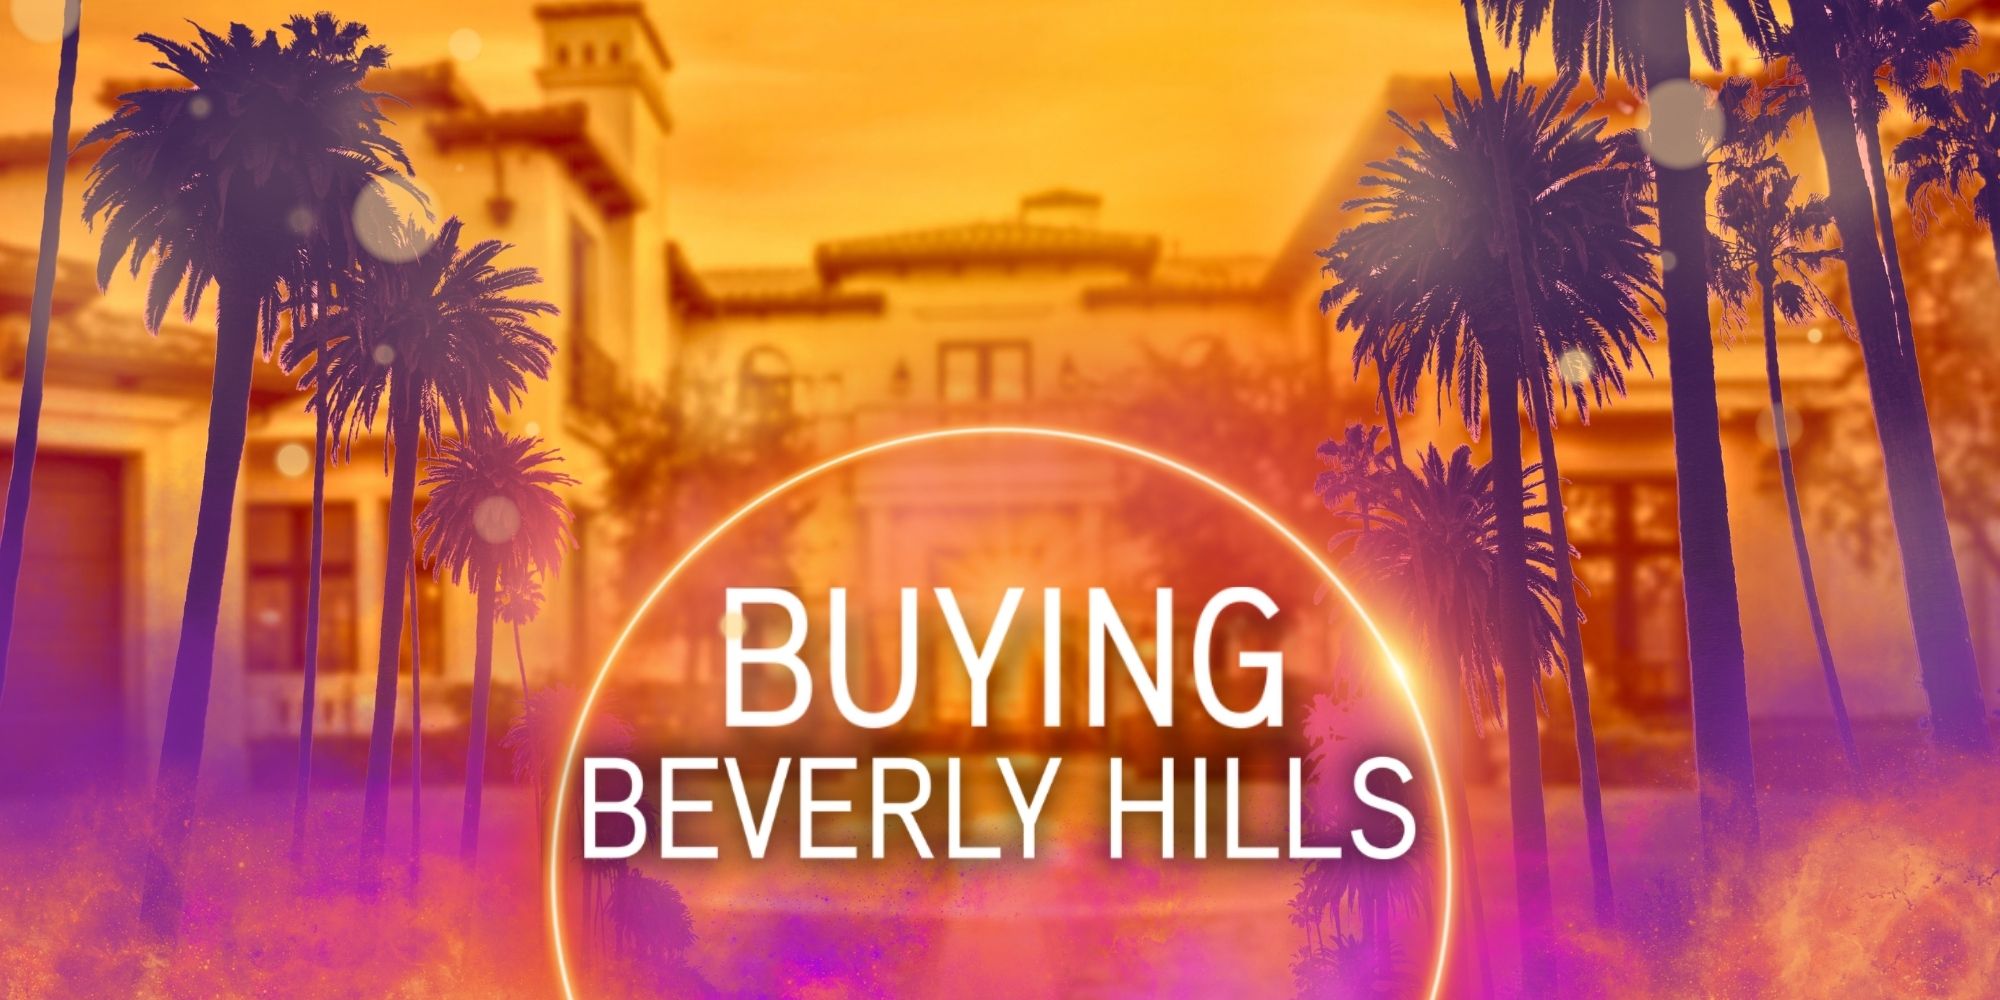  Buying Beverly Hills Season 2 promo